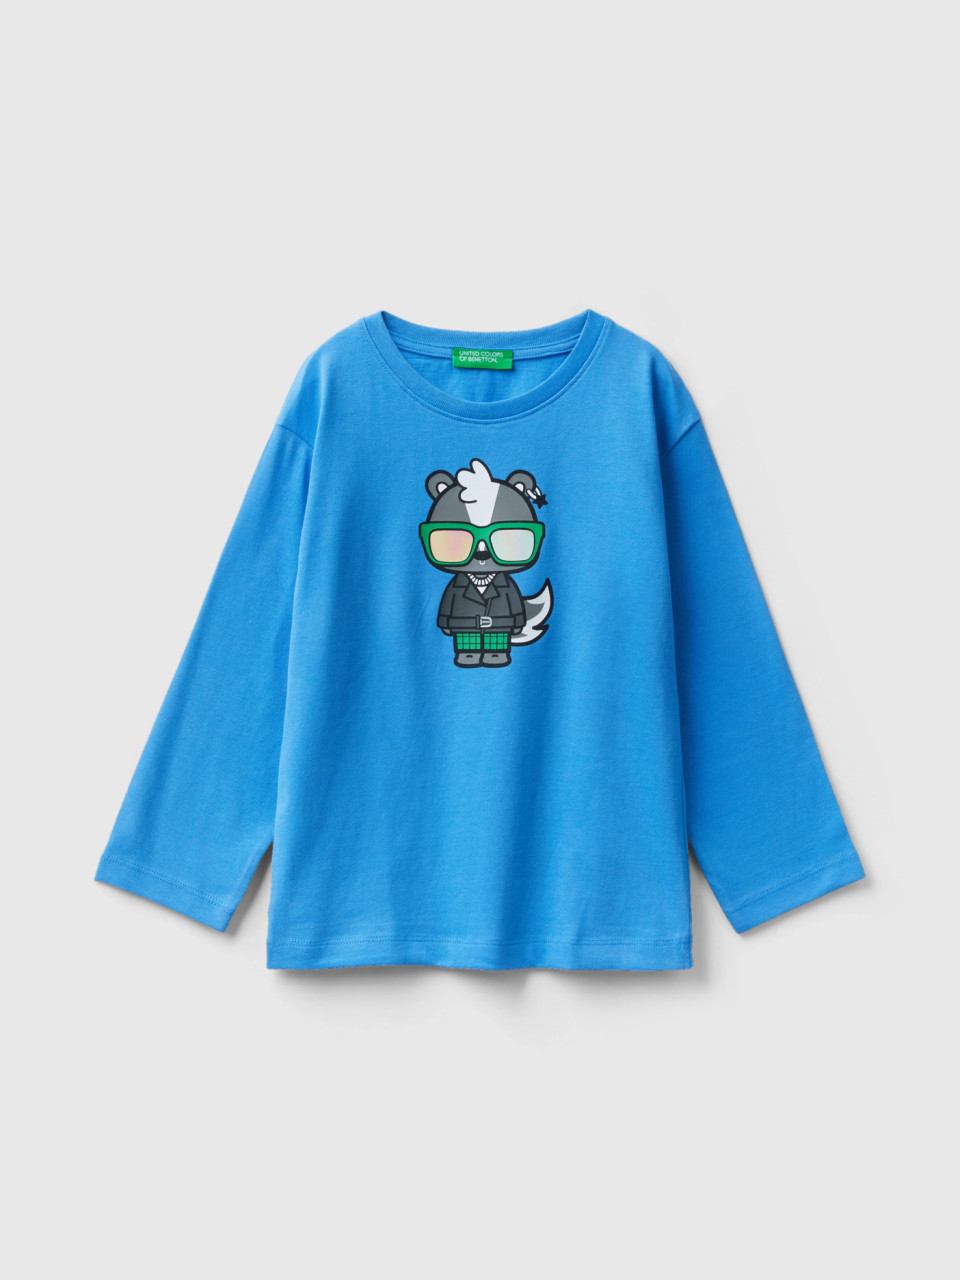 Benetton, Long Fiber Cotton T-shirt With Print, Bright Blue, Kids